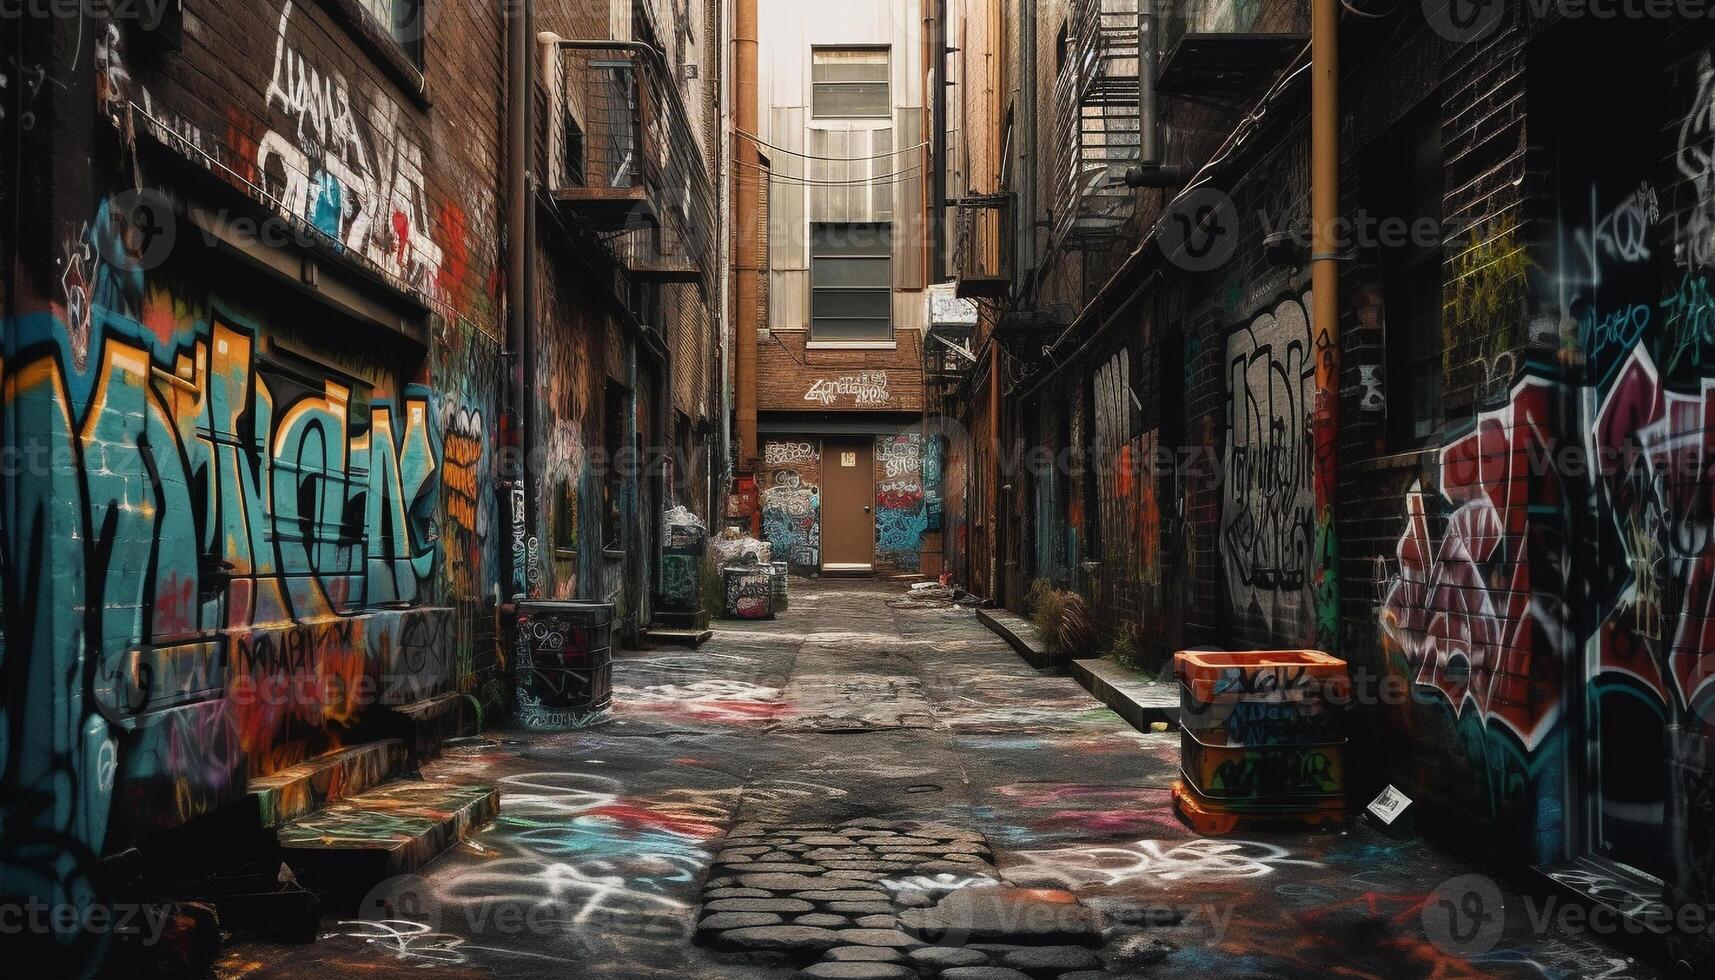 vuil straten, graffiti muren, chaotisch stad leven gegenereerd door ai foto